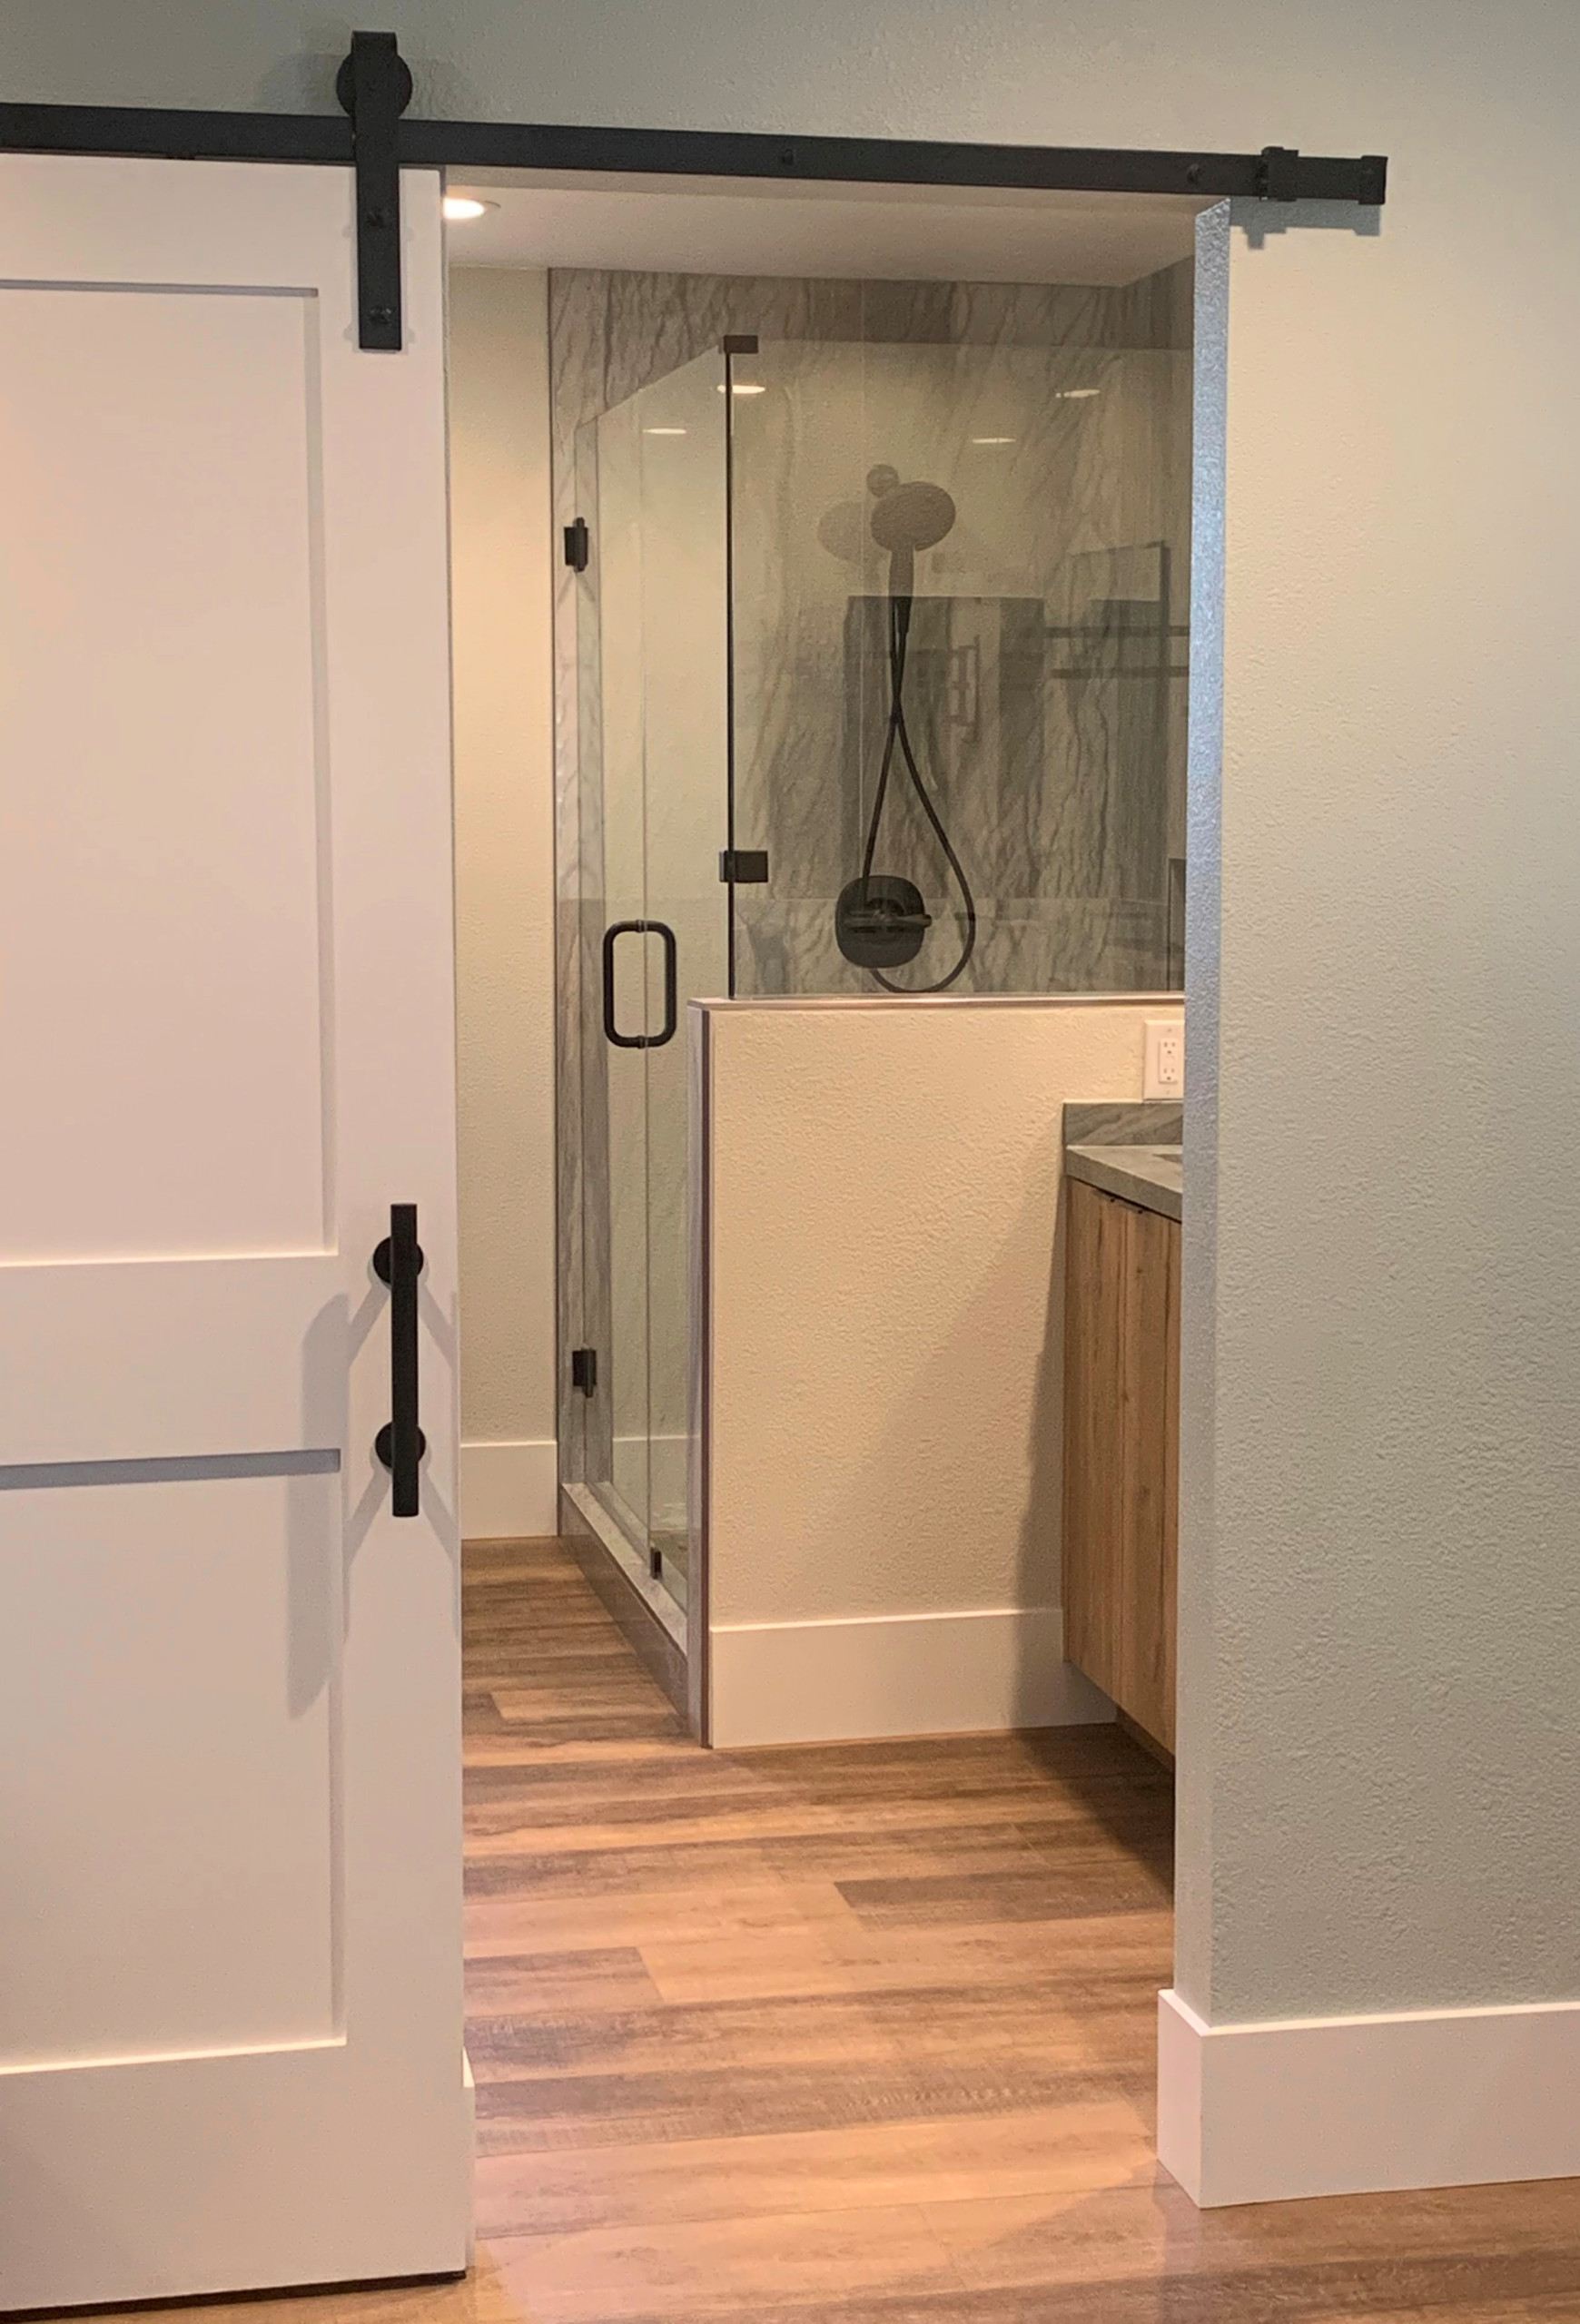 NEW BARN DOOR-New access point allows for 2 new doors-Closet & Bathroom